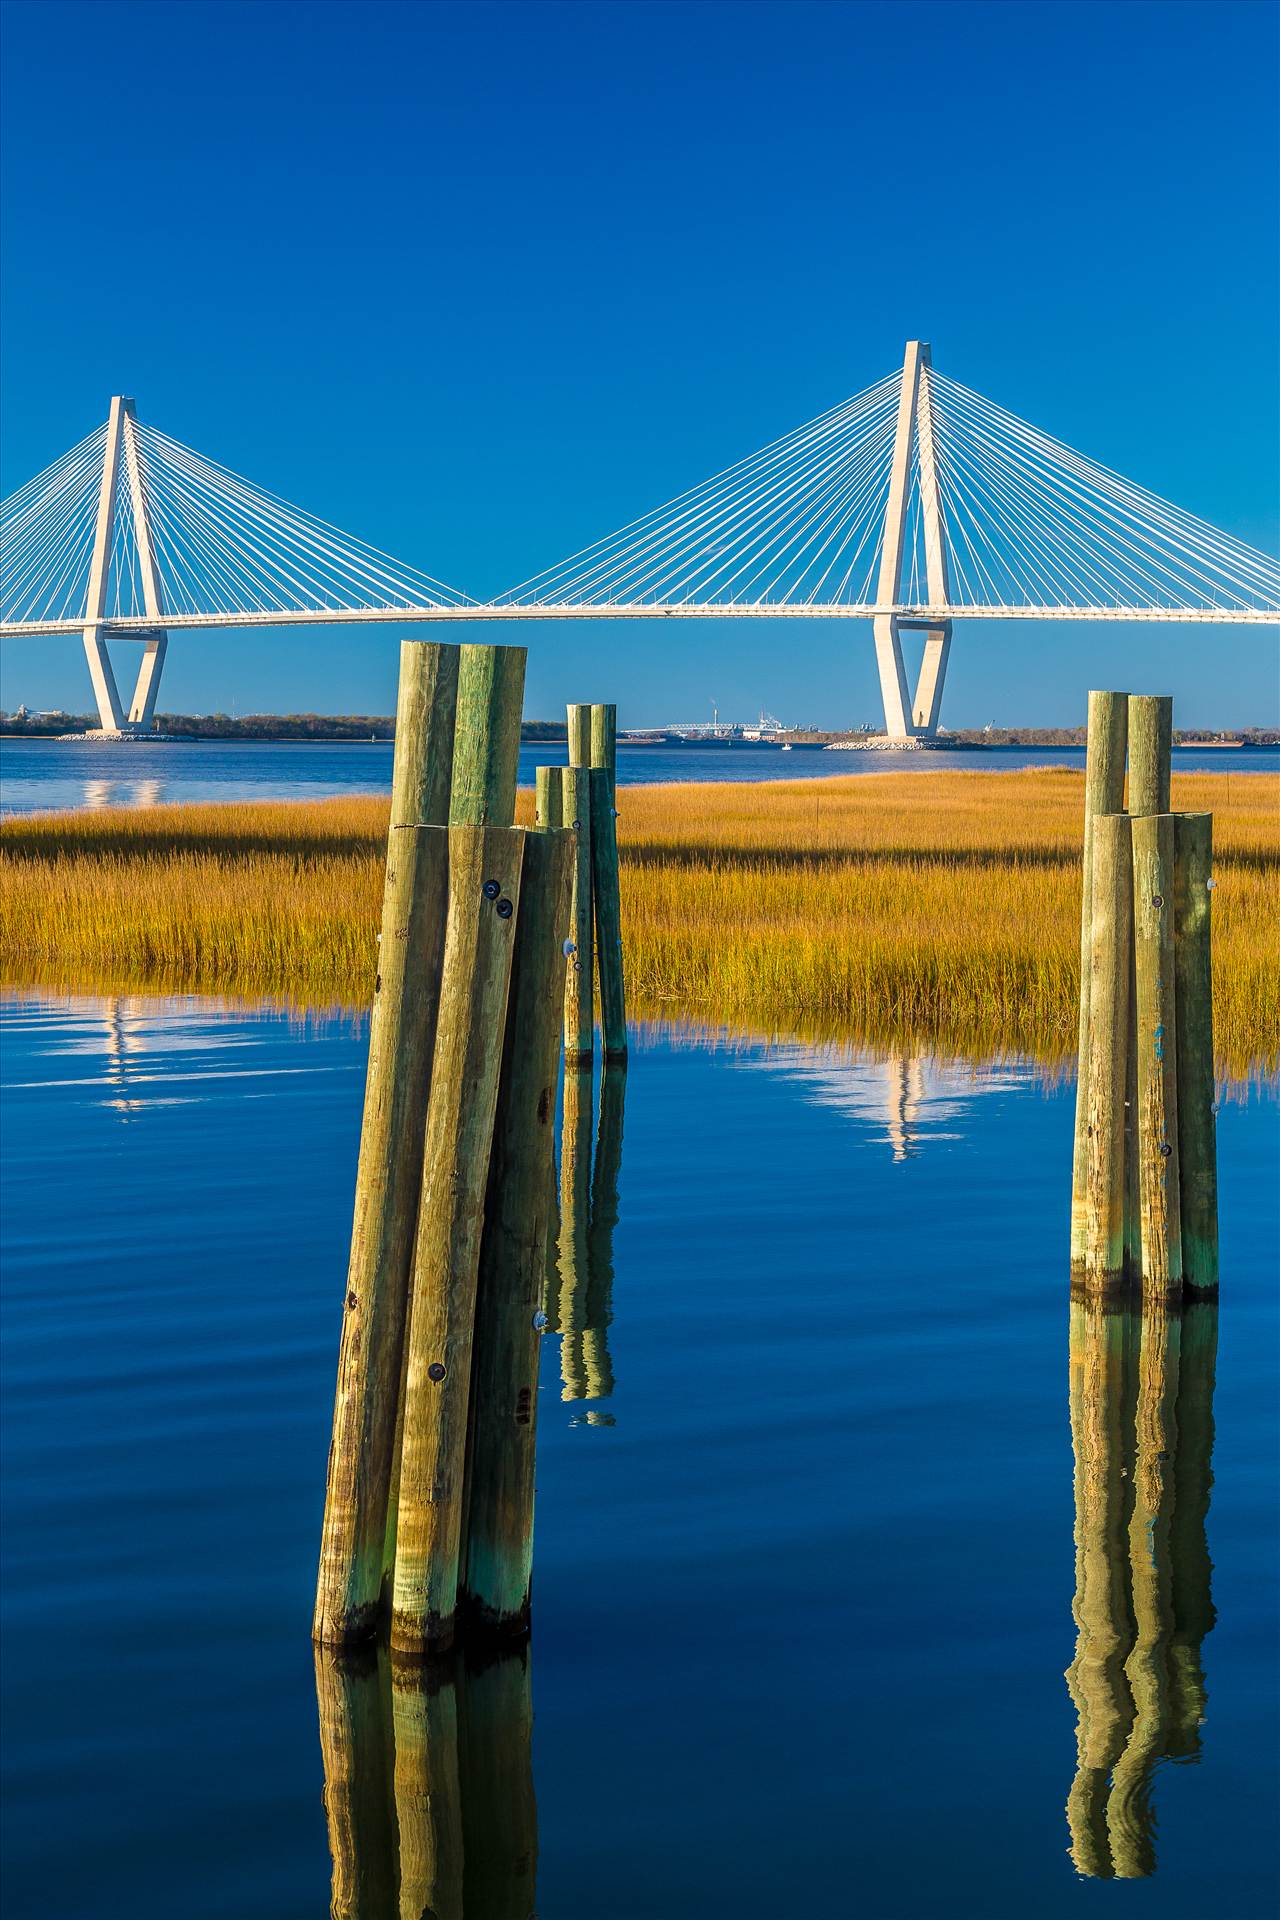 Arthur Ravenel Jr. Bridge From Patriots Point From Patriots Point Naval & Maritime Museum in Charleston, South Carolina. by Scott Smith Photos